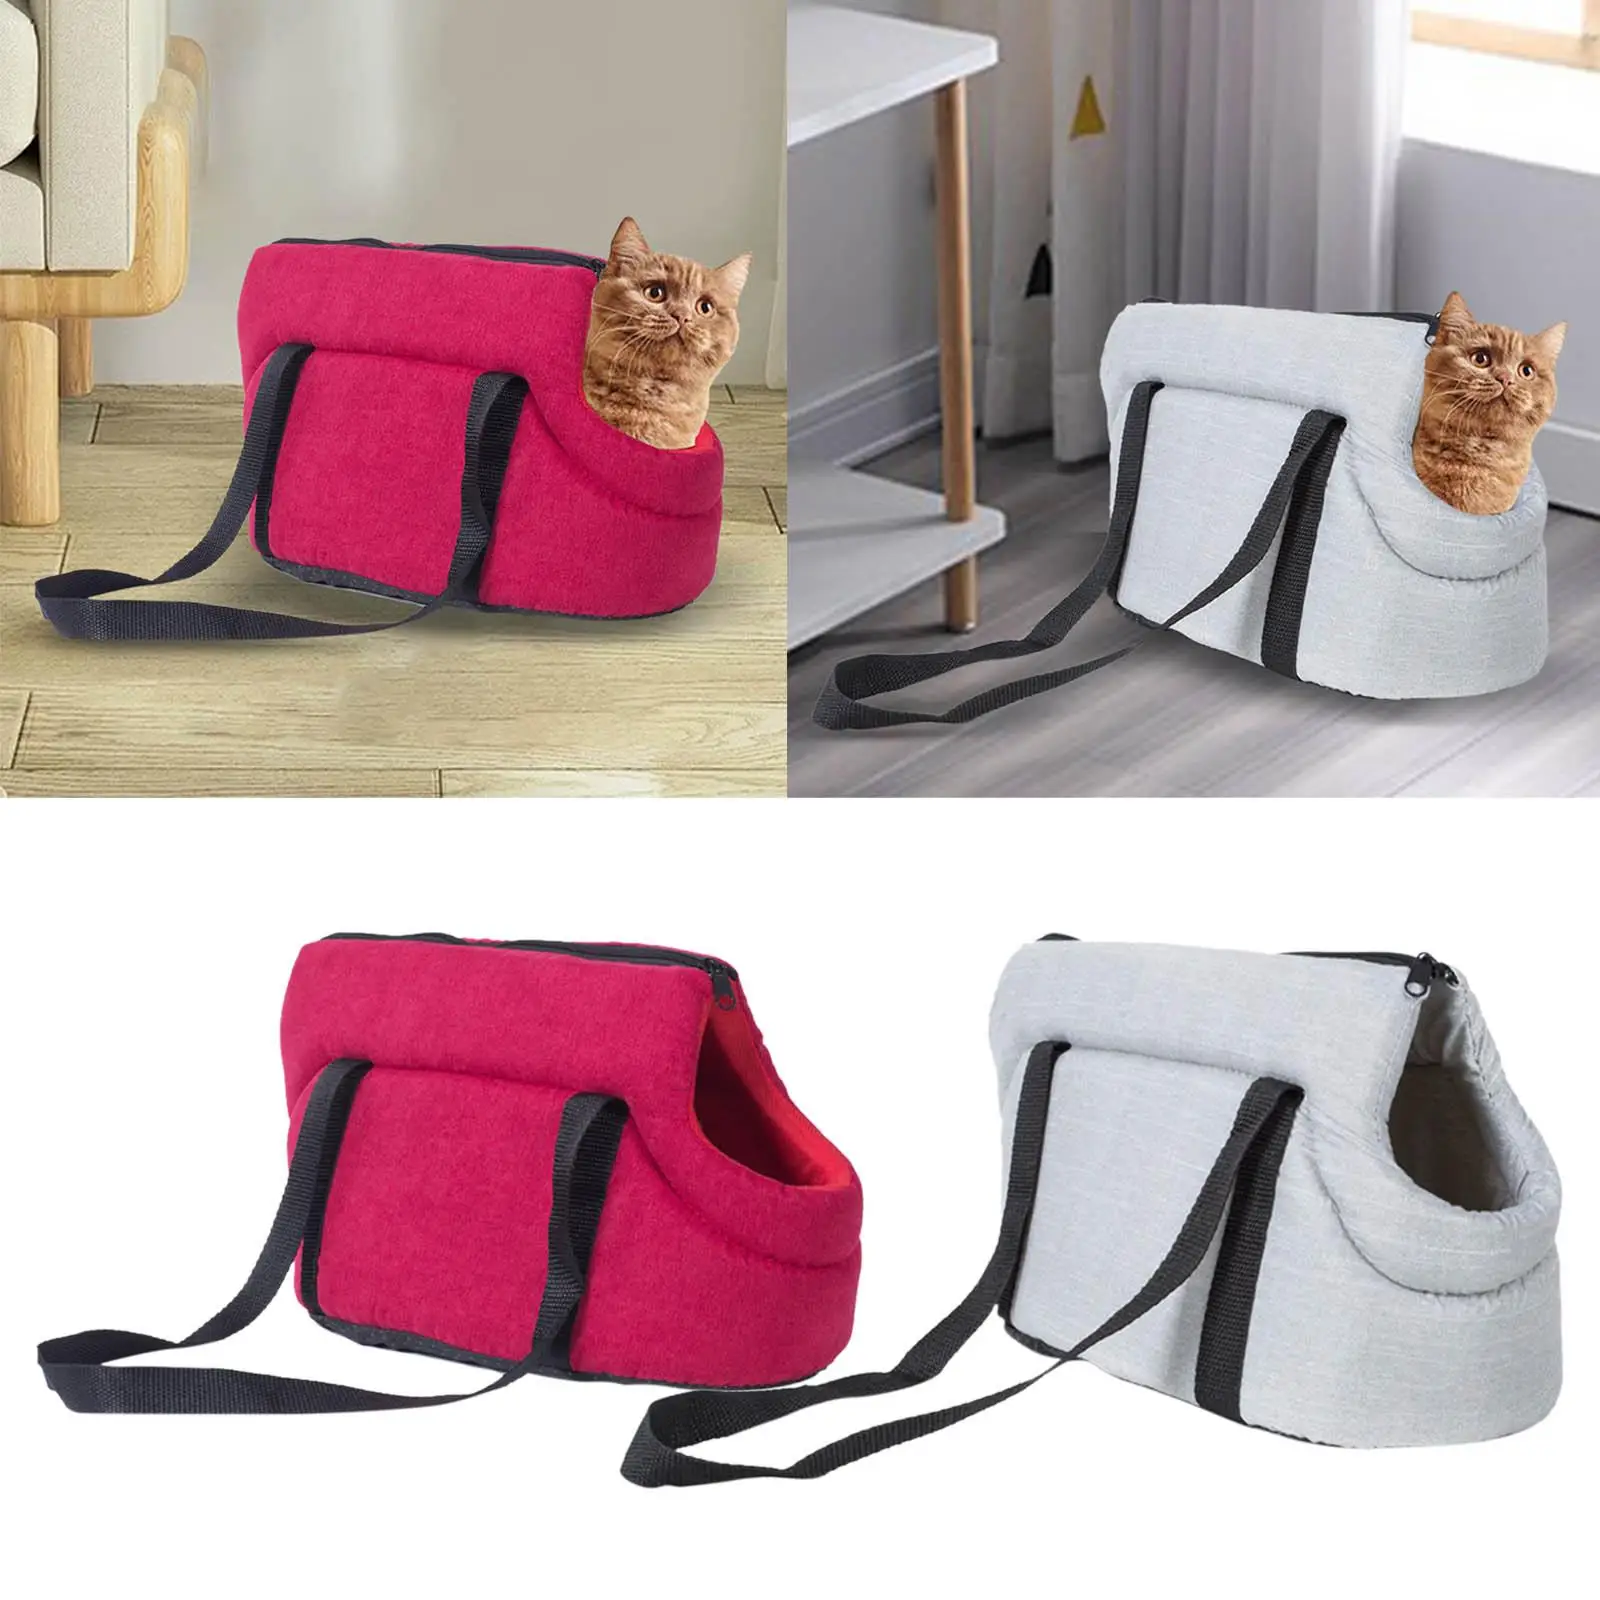 Portable Dog Car Seat Travel Transport Bag Shoulder Bag Handbag with Handle Tote Pet Carrier for Traveling Walking Small Animals